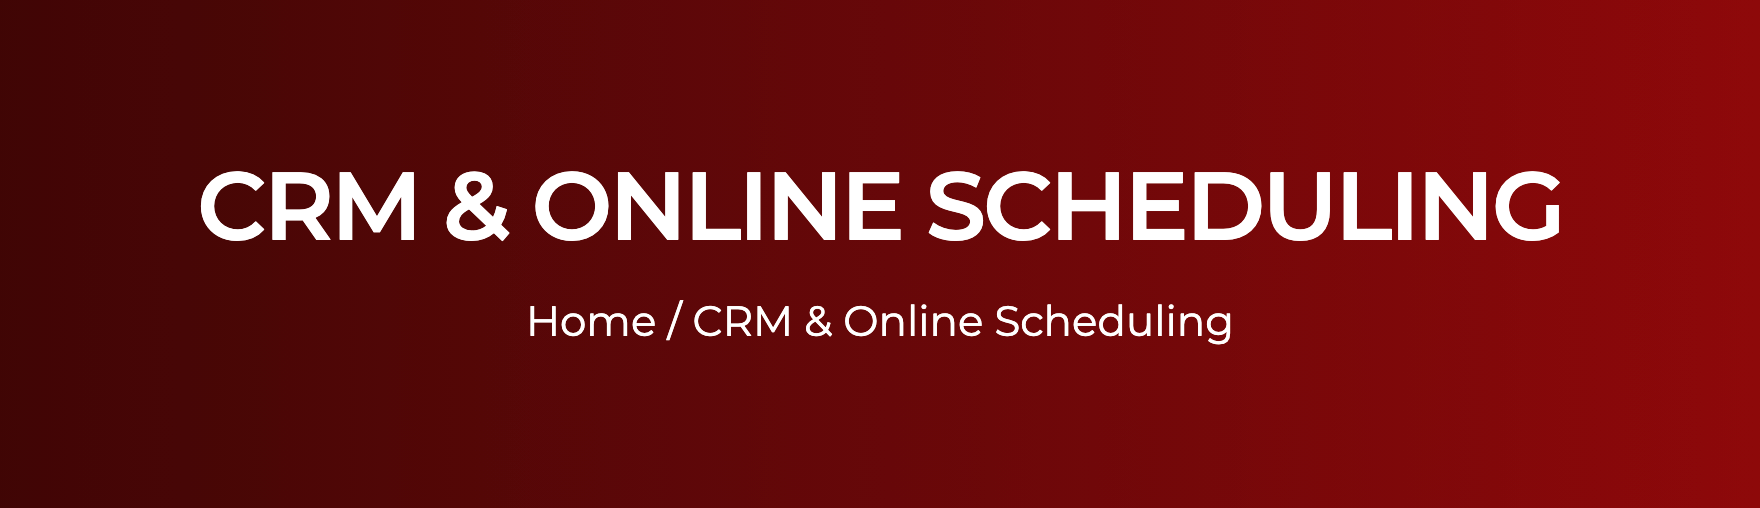 CRM Online Scheduling